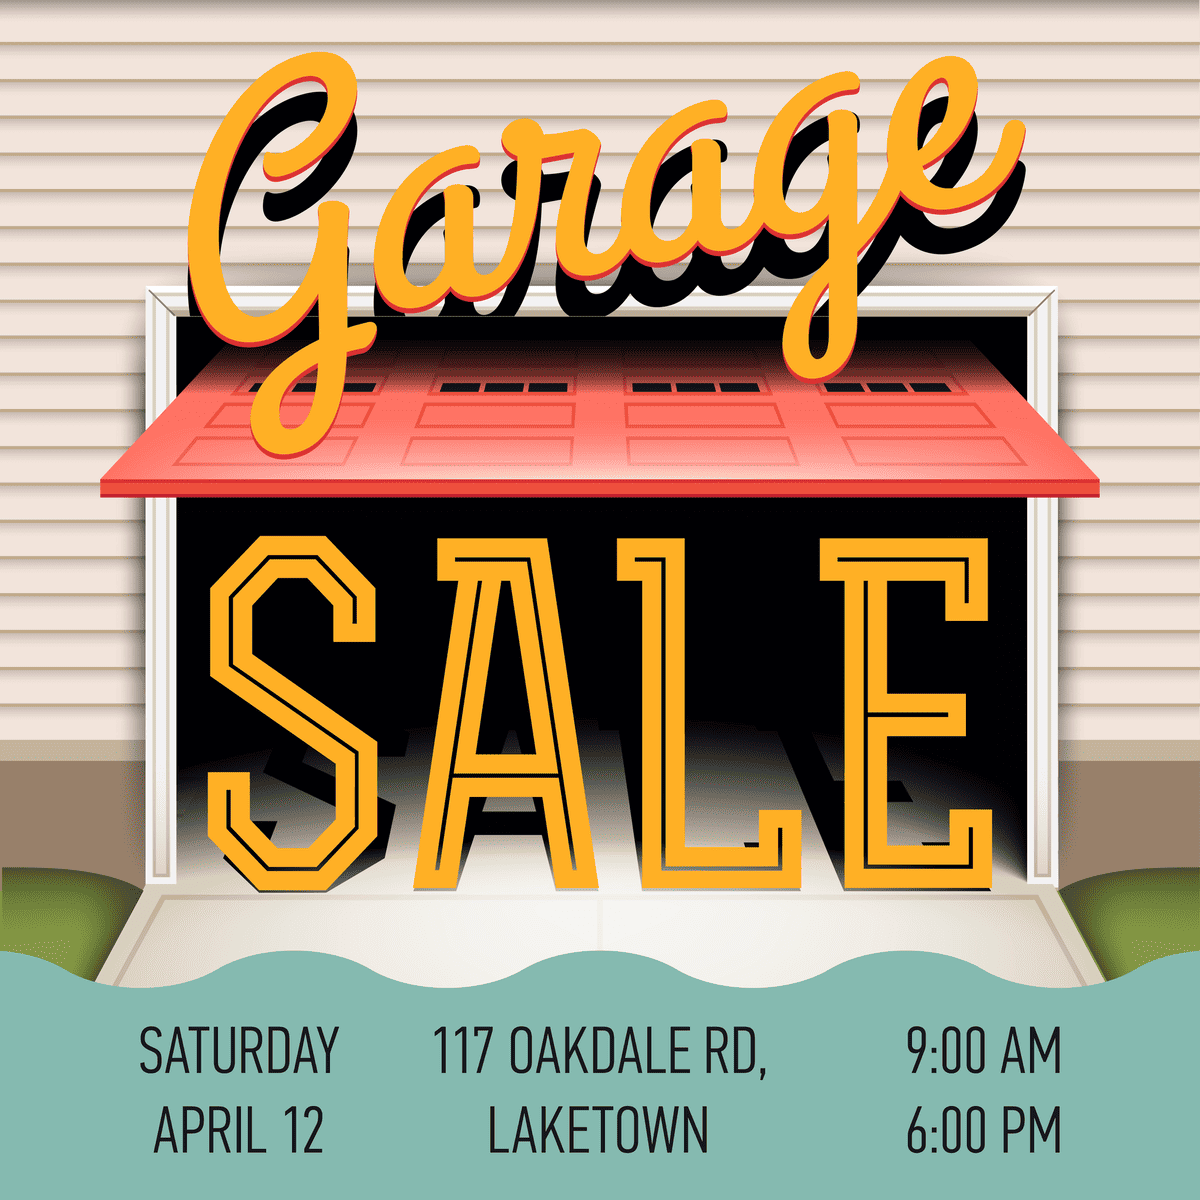 Garage sale poster.